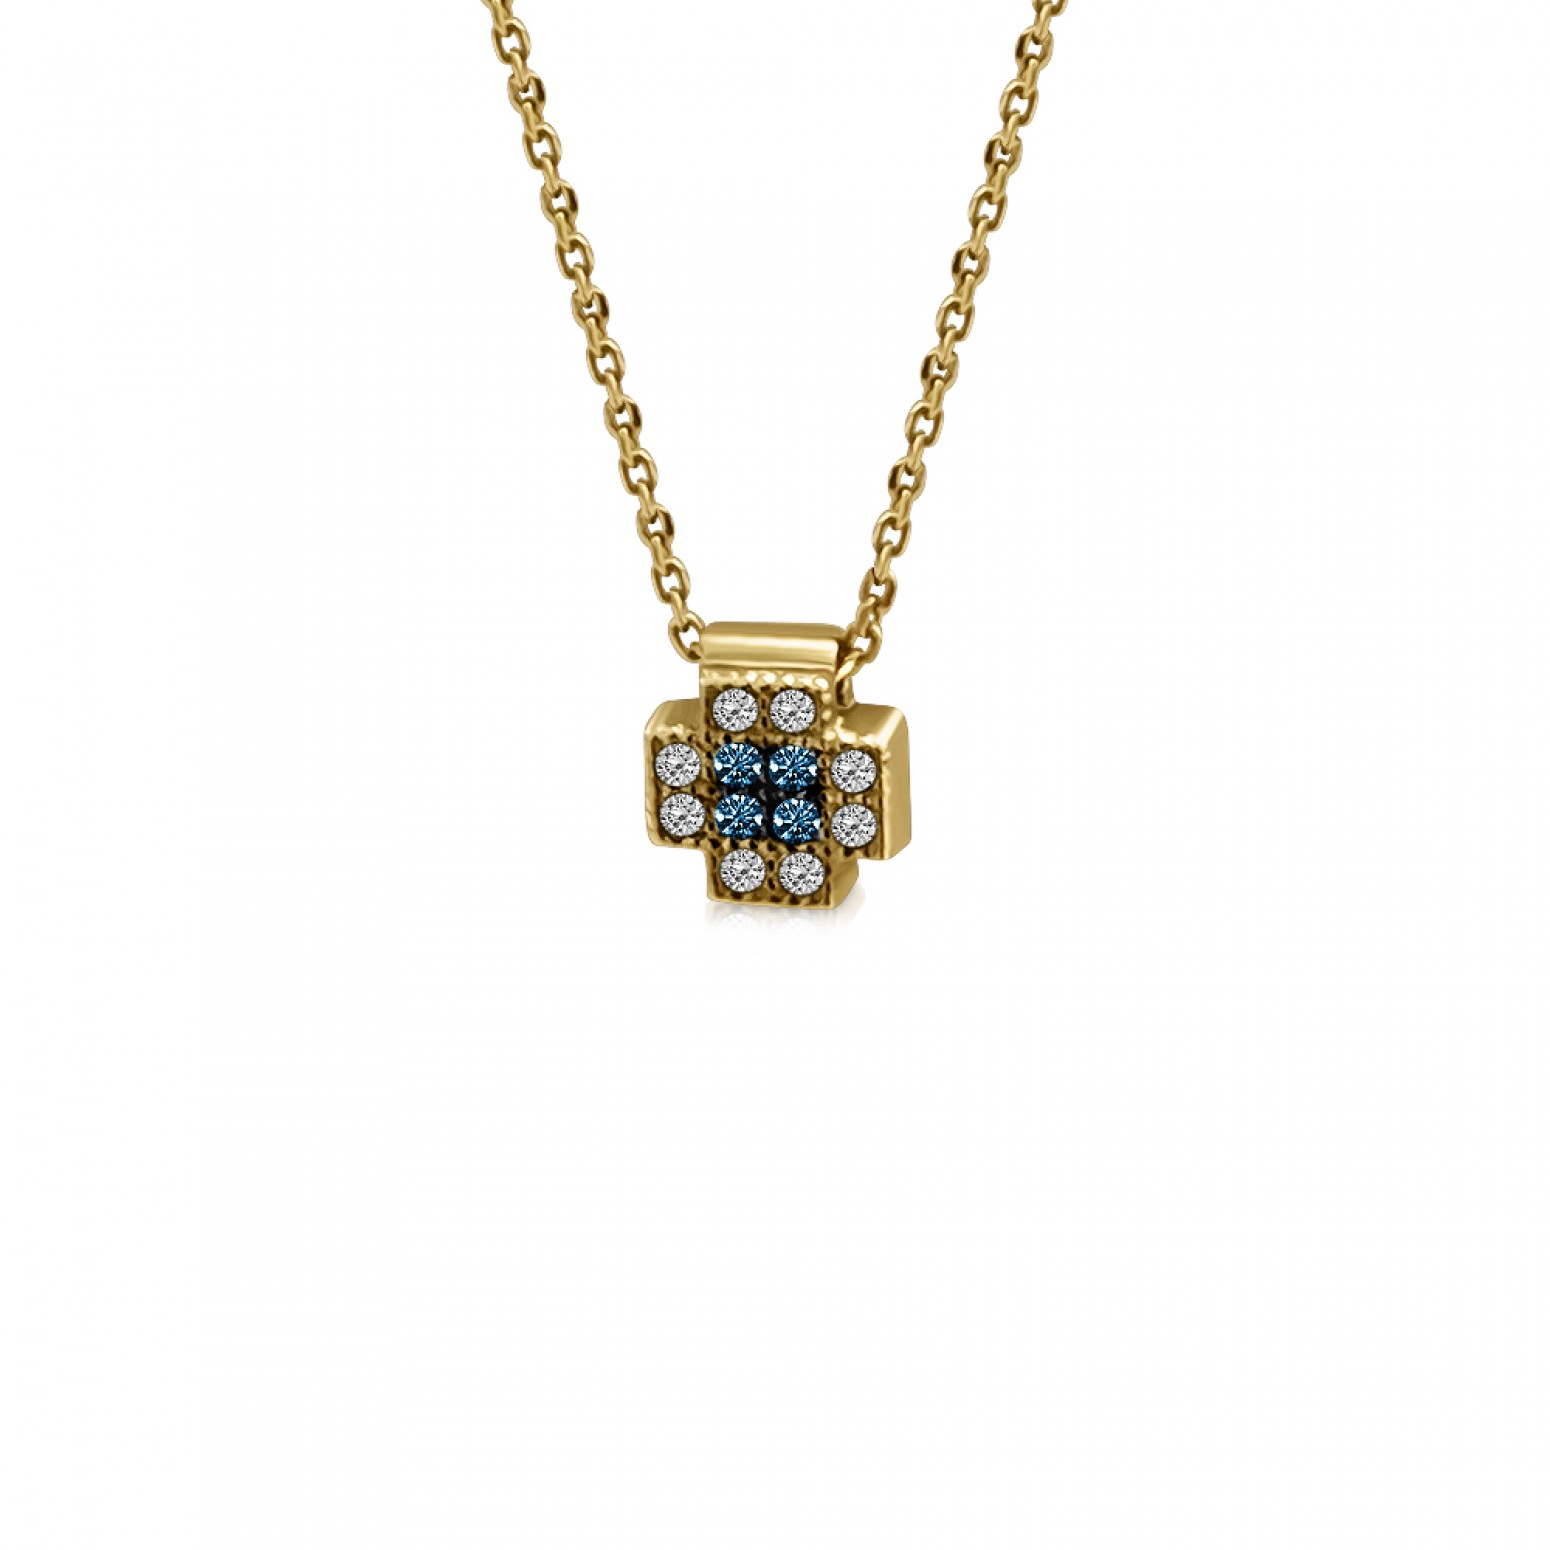 Cross necklace, Κ14 gold with blue and white zircon, ko4073 NECKLACES Κοσμηματα - chrilia.gr